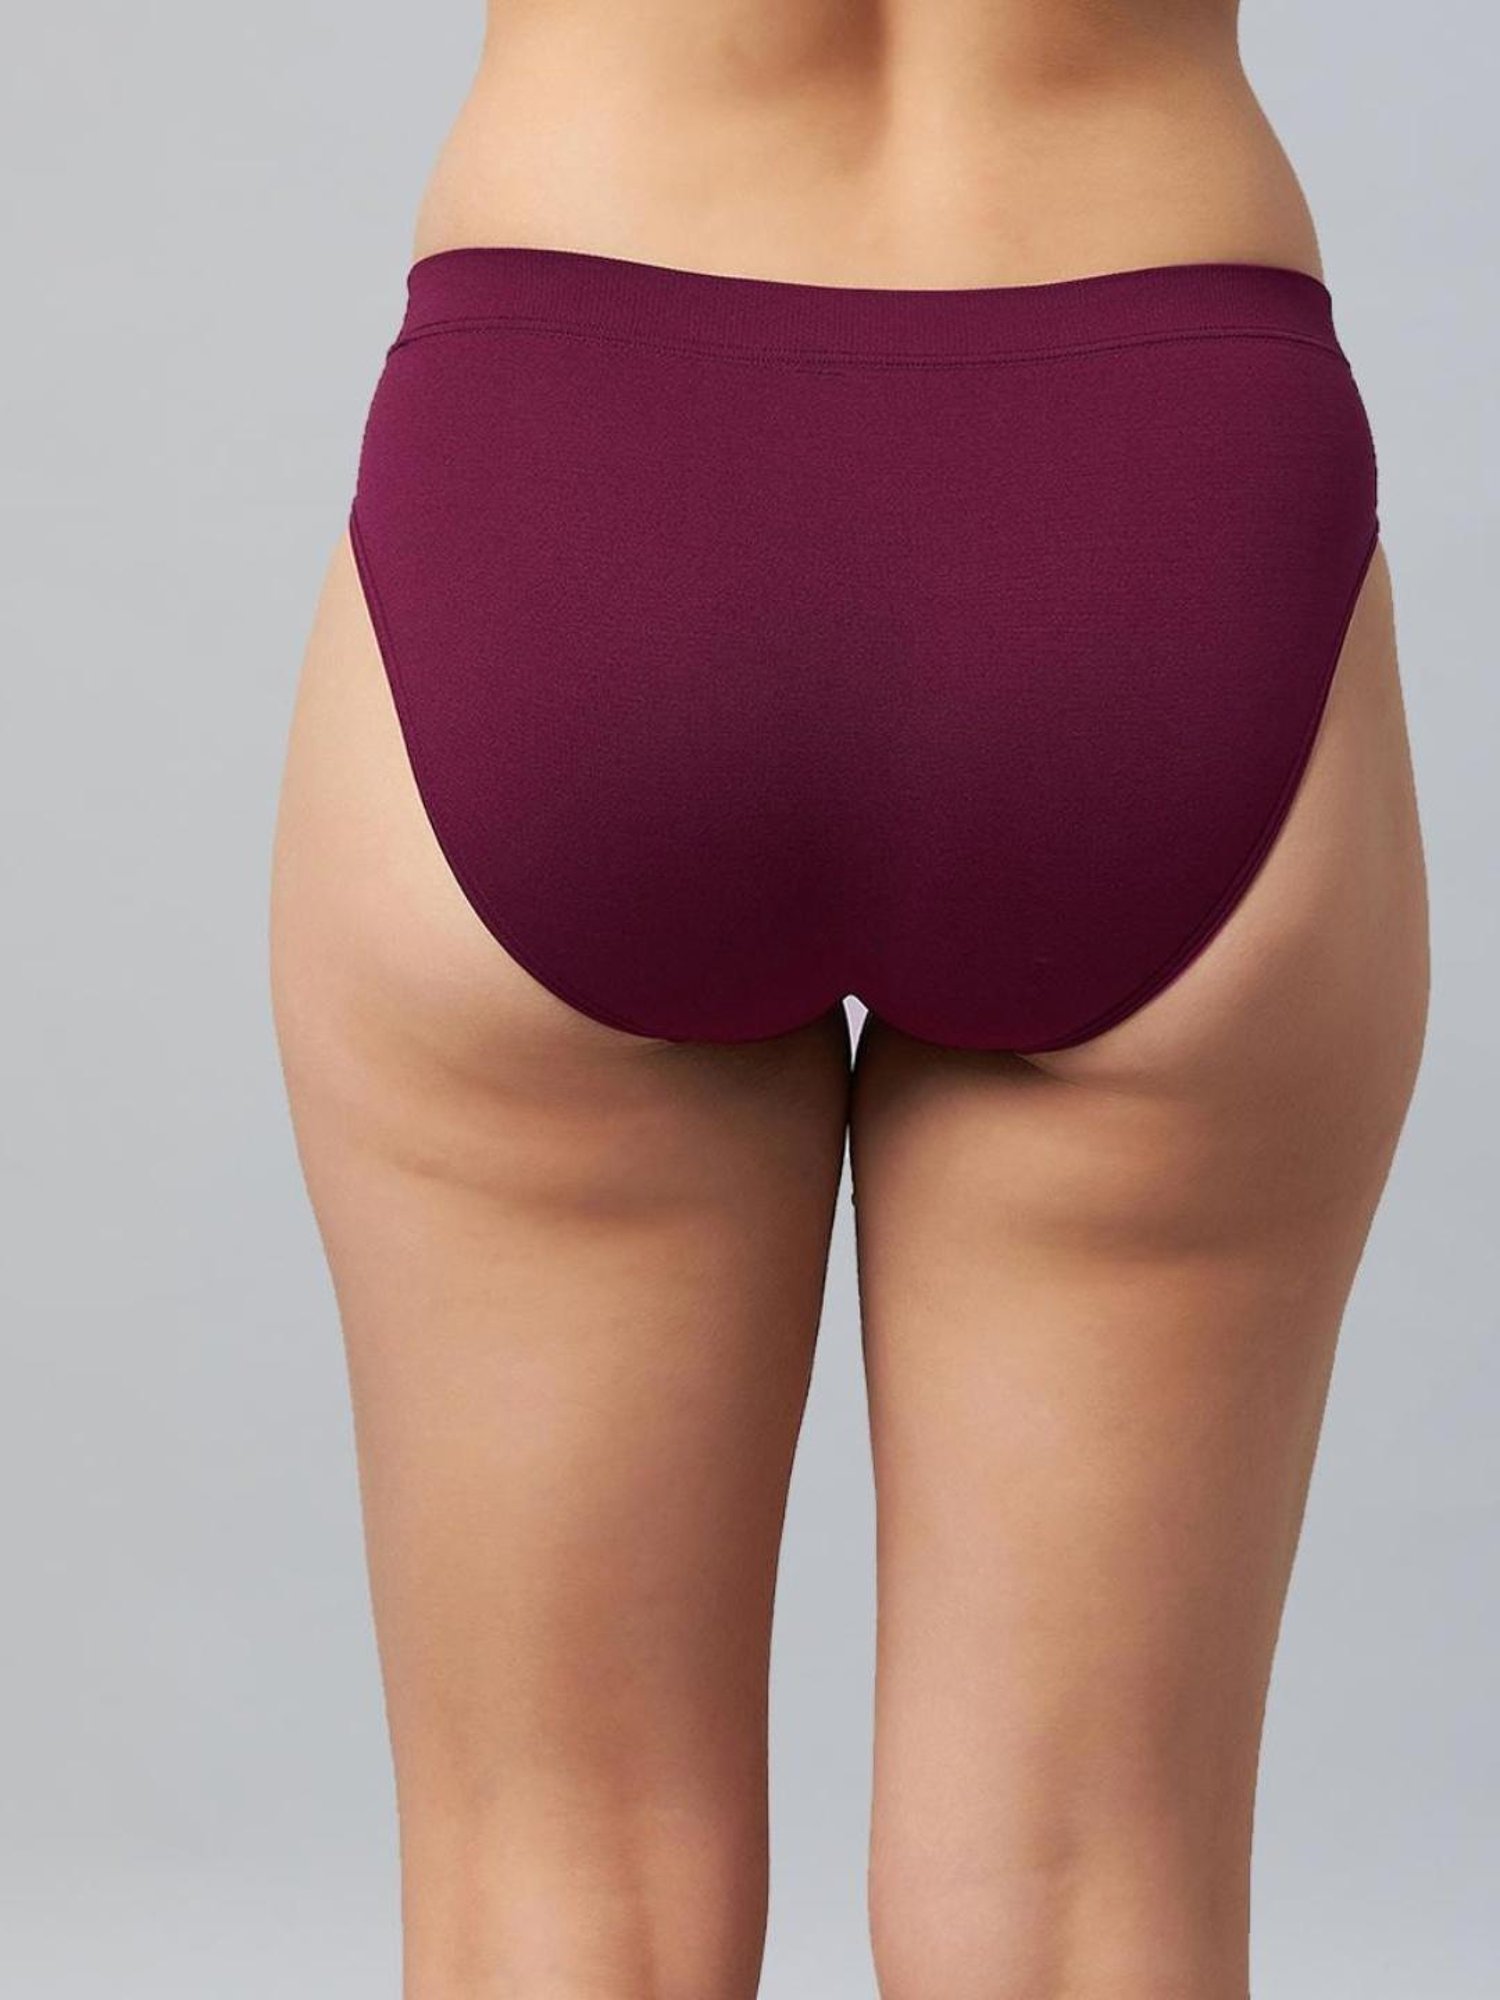 Buy C9 Airwear Women's Assorted Panty Pack - Multi-Color online